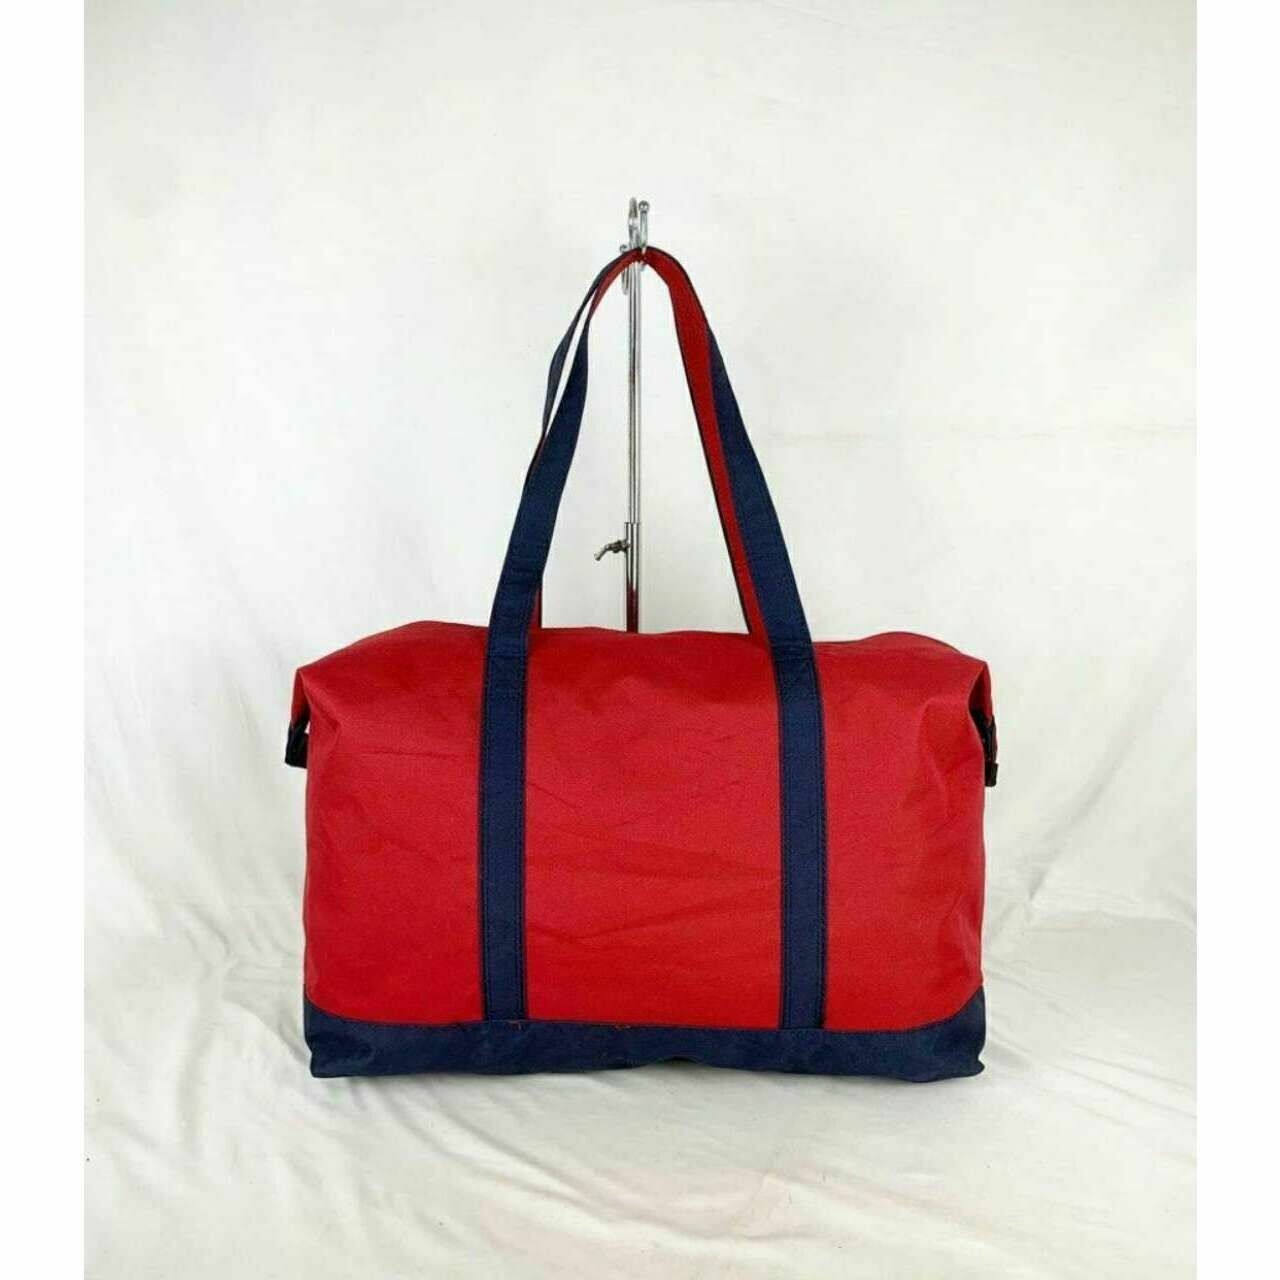 Samsonite Red Luggage and Travel